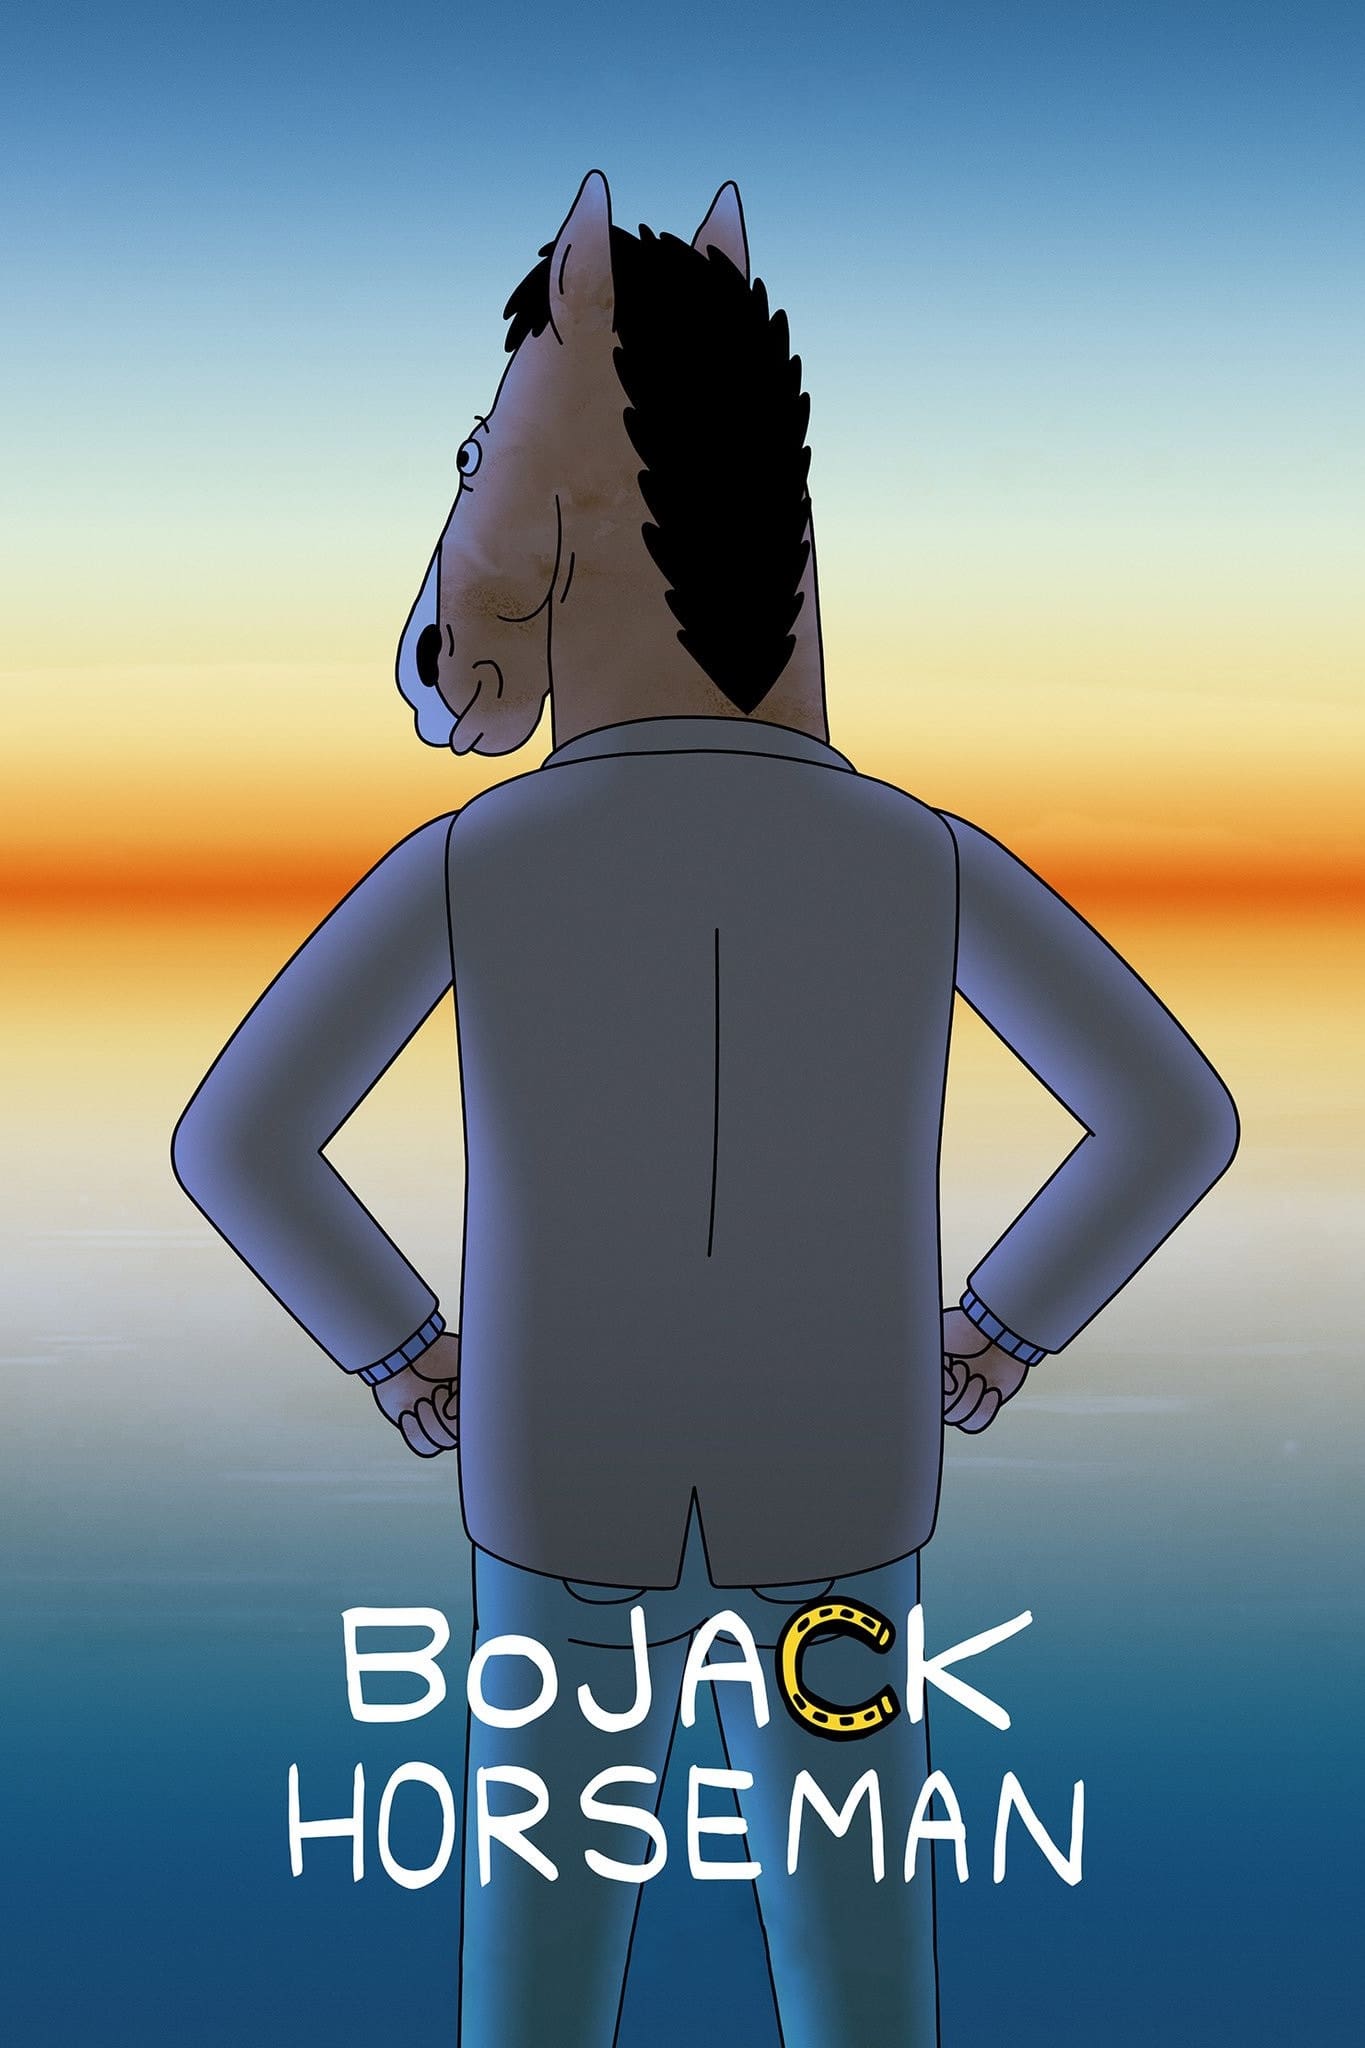 BoJack Horseman TV Shows About Depression